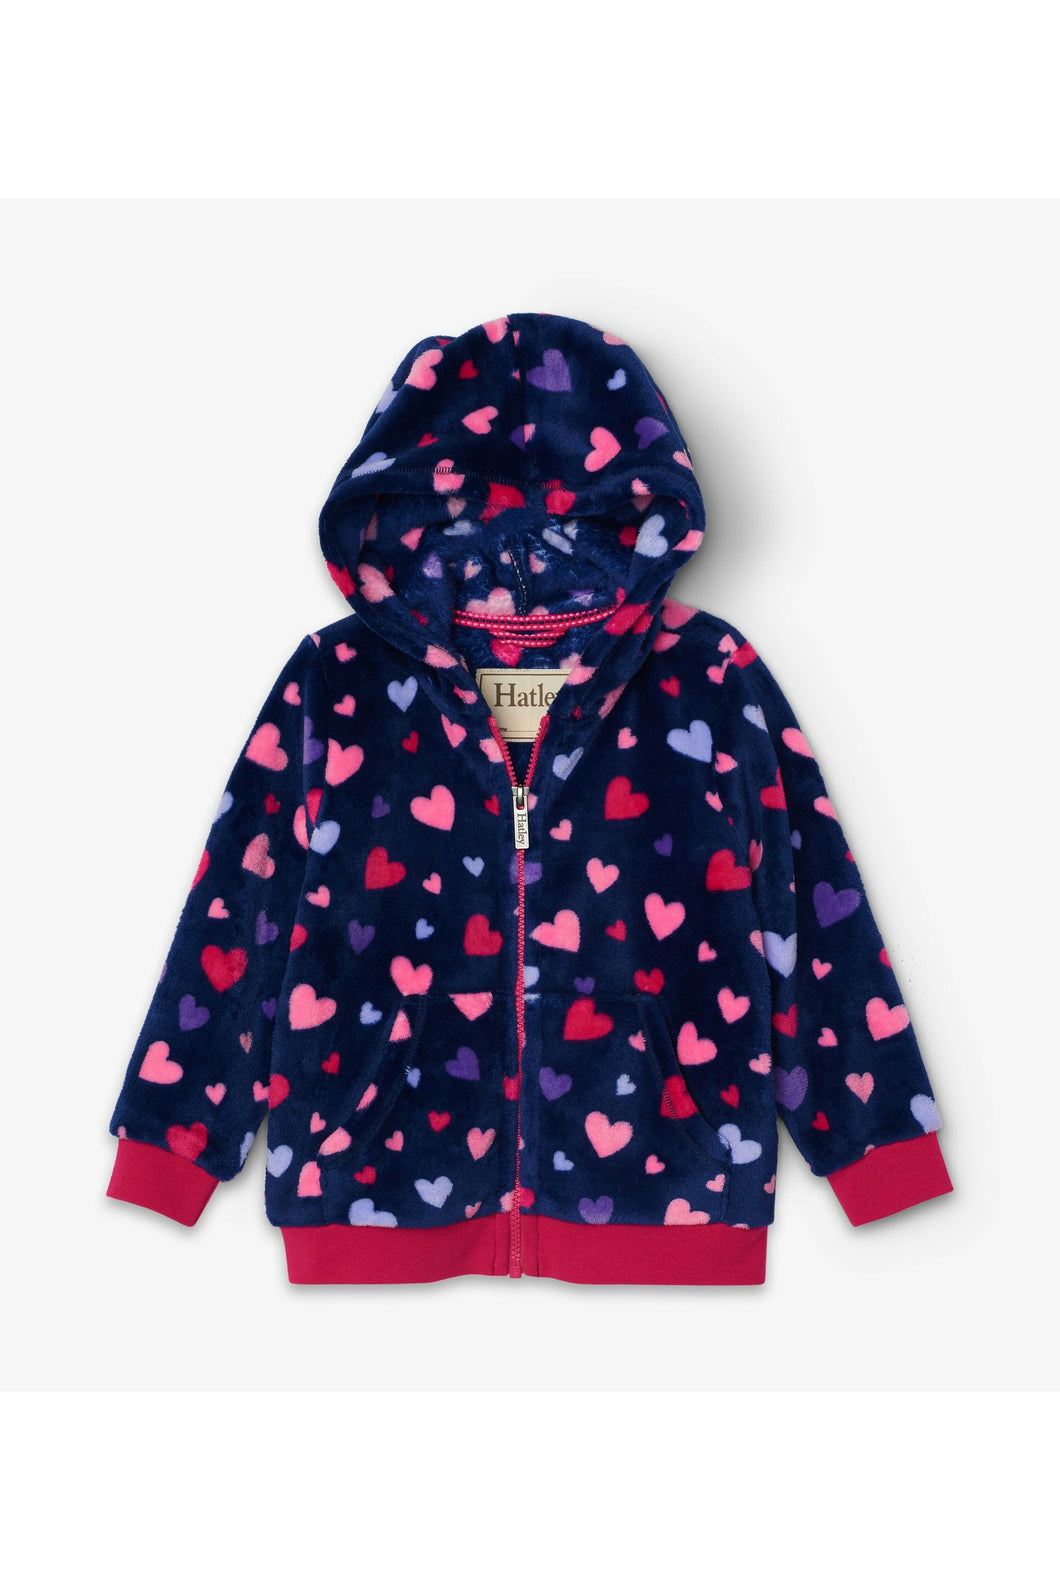 Confetti Hearts Fleece Jacket